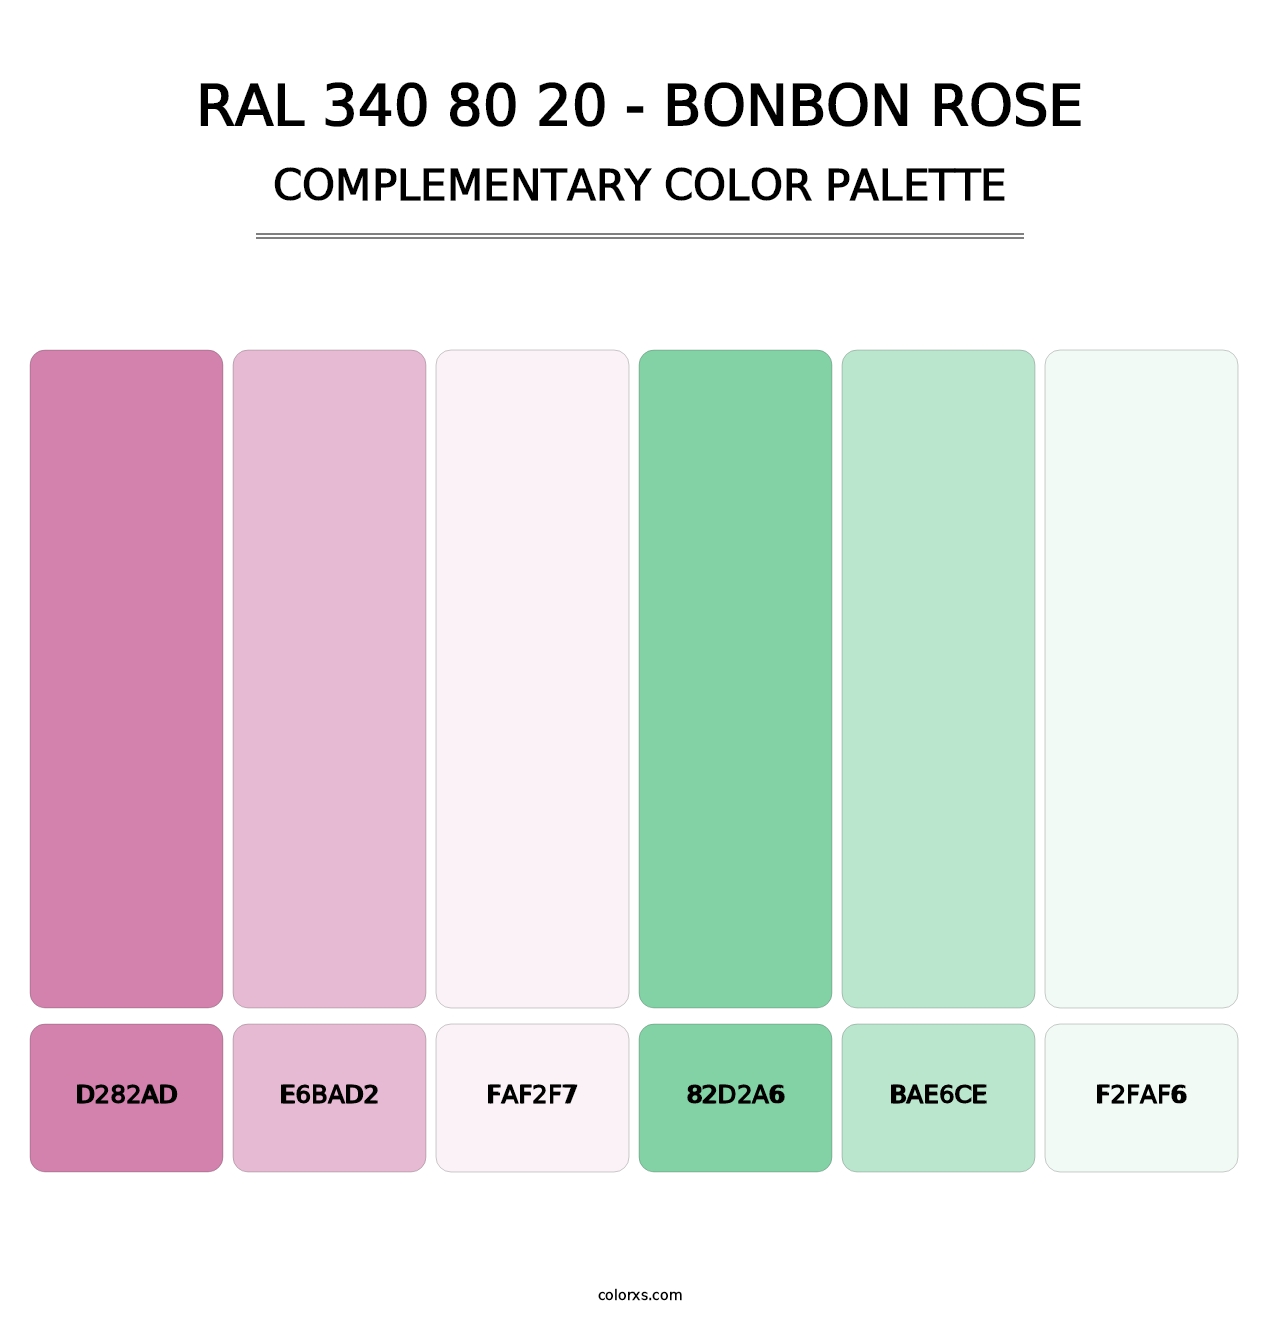 RAL 340 80 20 - Bonbon Rose - Complementary Color Palette